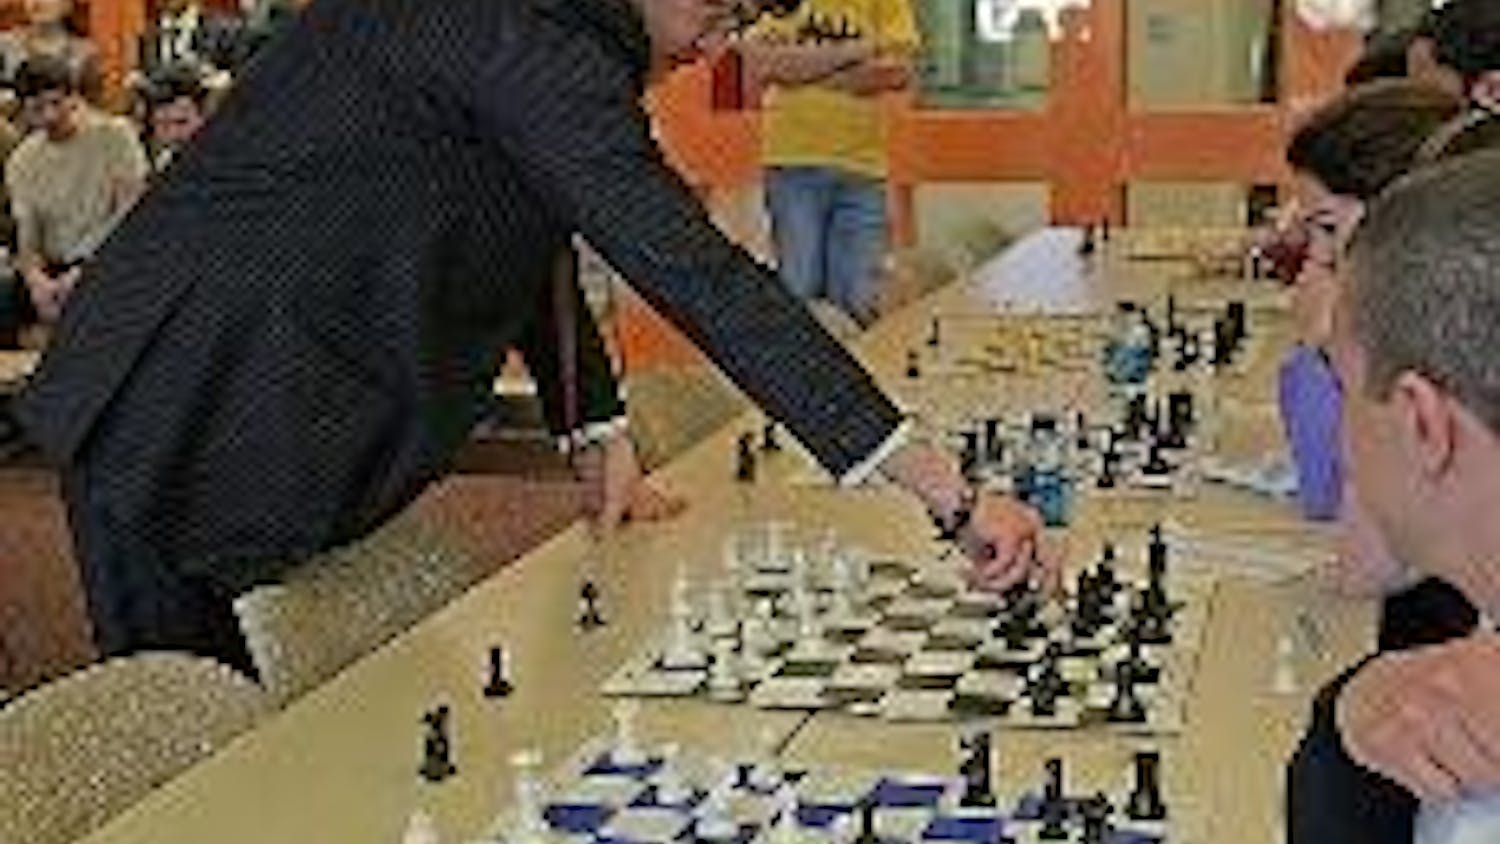 CHECK MATE - International Chess Grandmaster Darmen Sadvakasov plays 20 members of AU's chess club simultaneously. He won 19 of the games and tied one. 